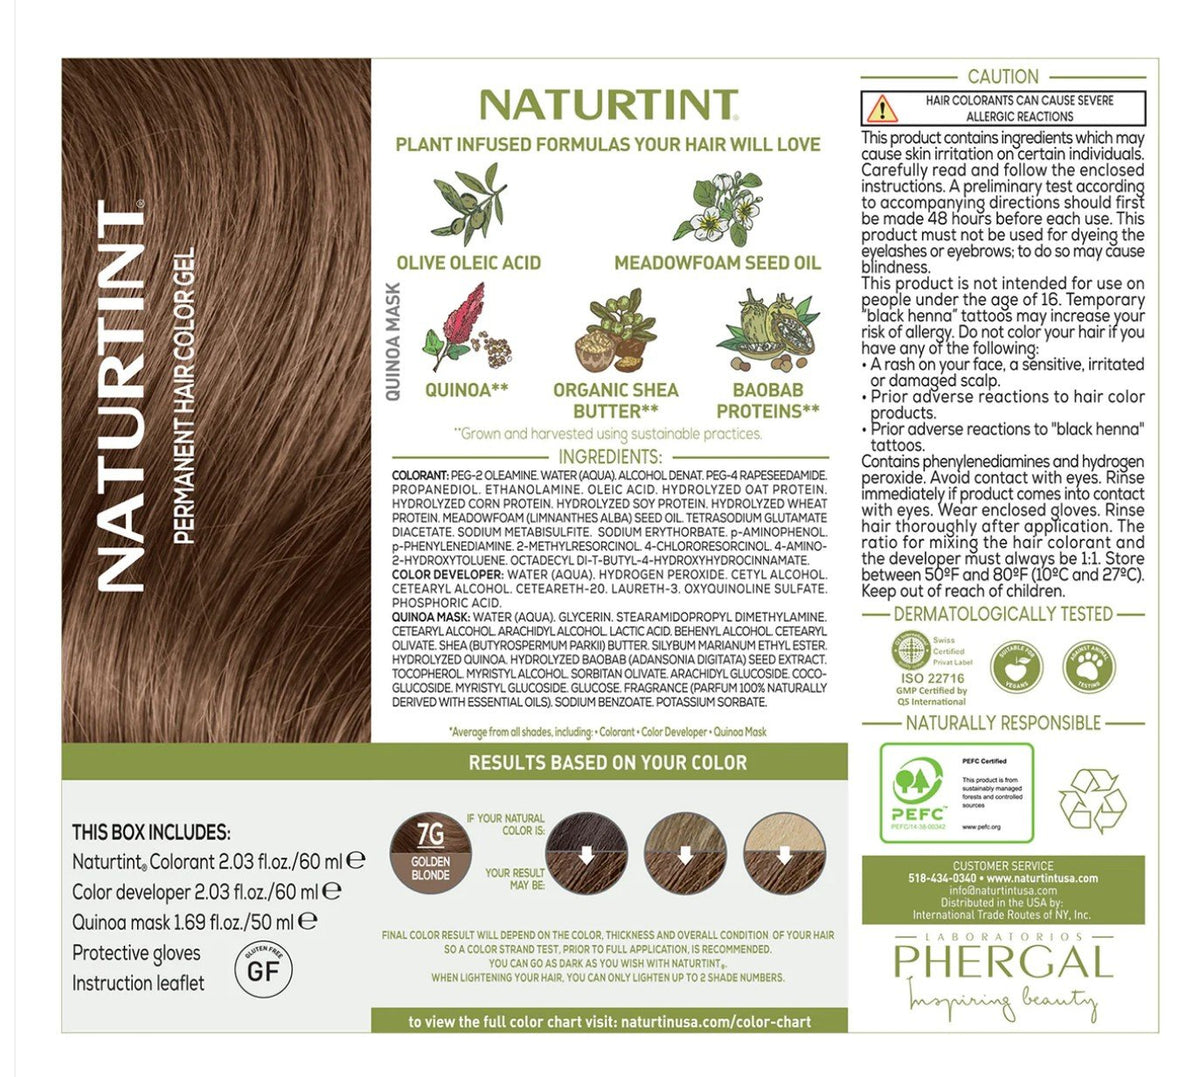 Naturtint Hair Color-7G/Golden Blonde 4.5 oz Liquid